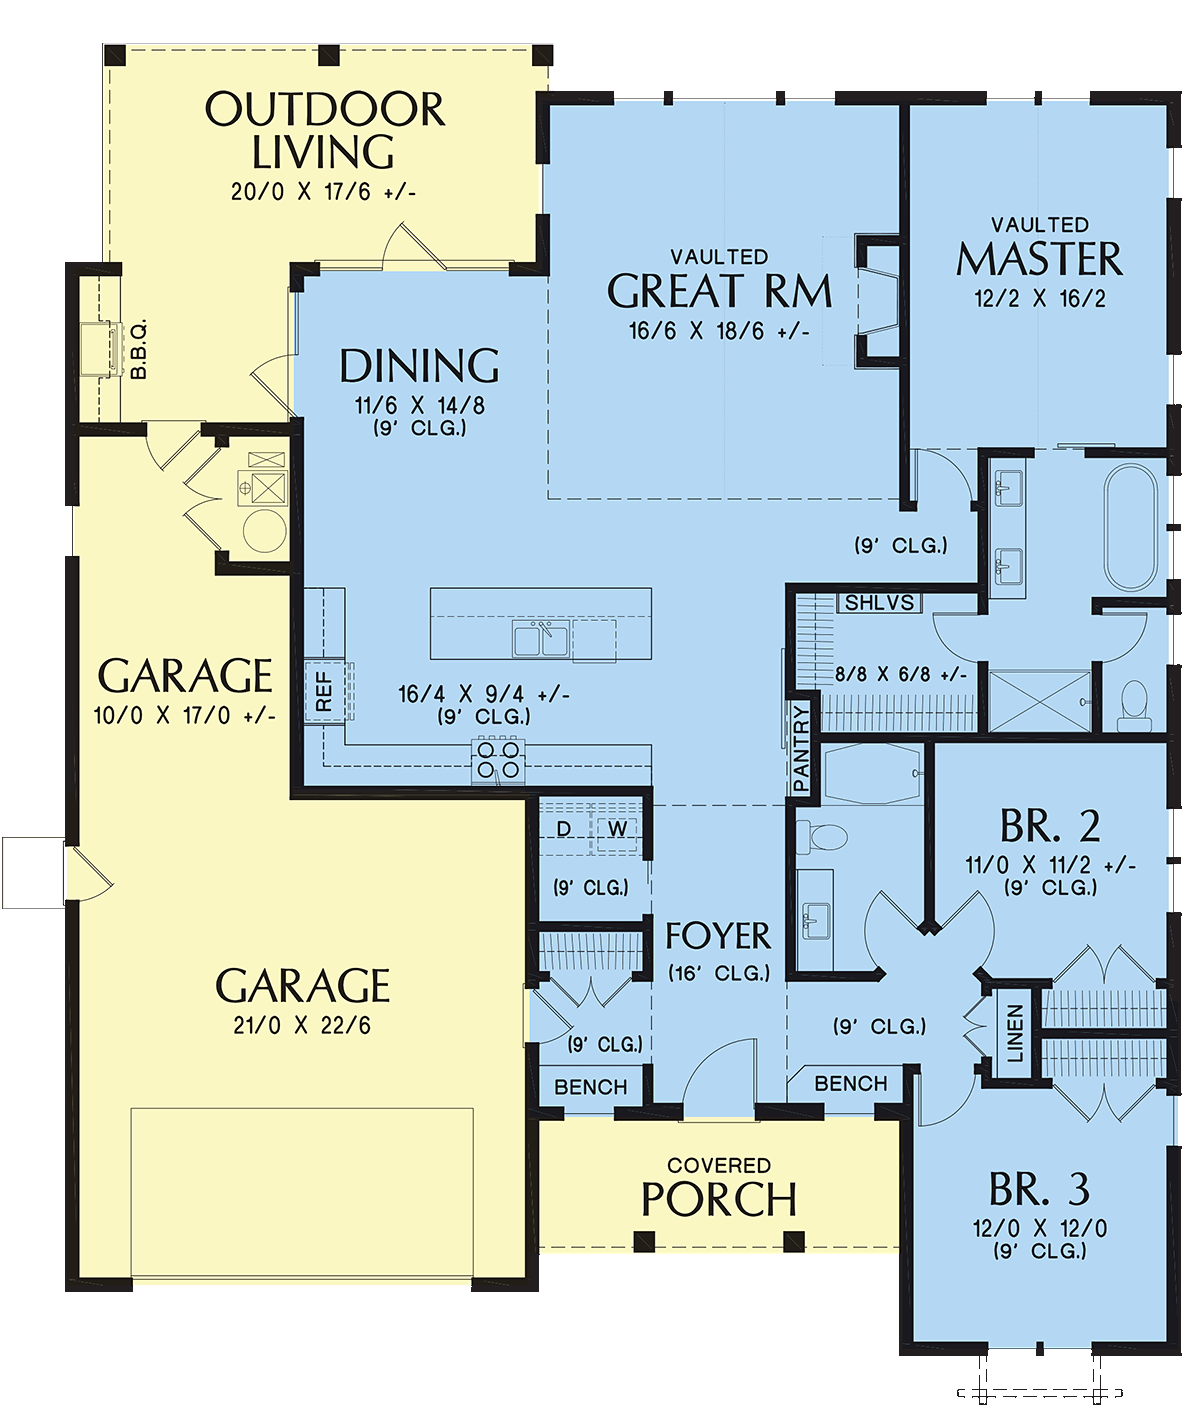 Modern Style House Plan 81205 With 3 Bed 2 Bath 2 Car Garage